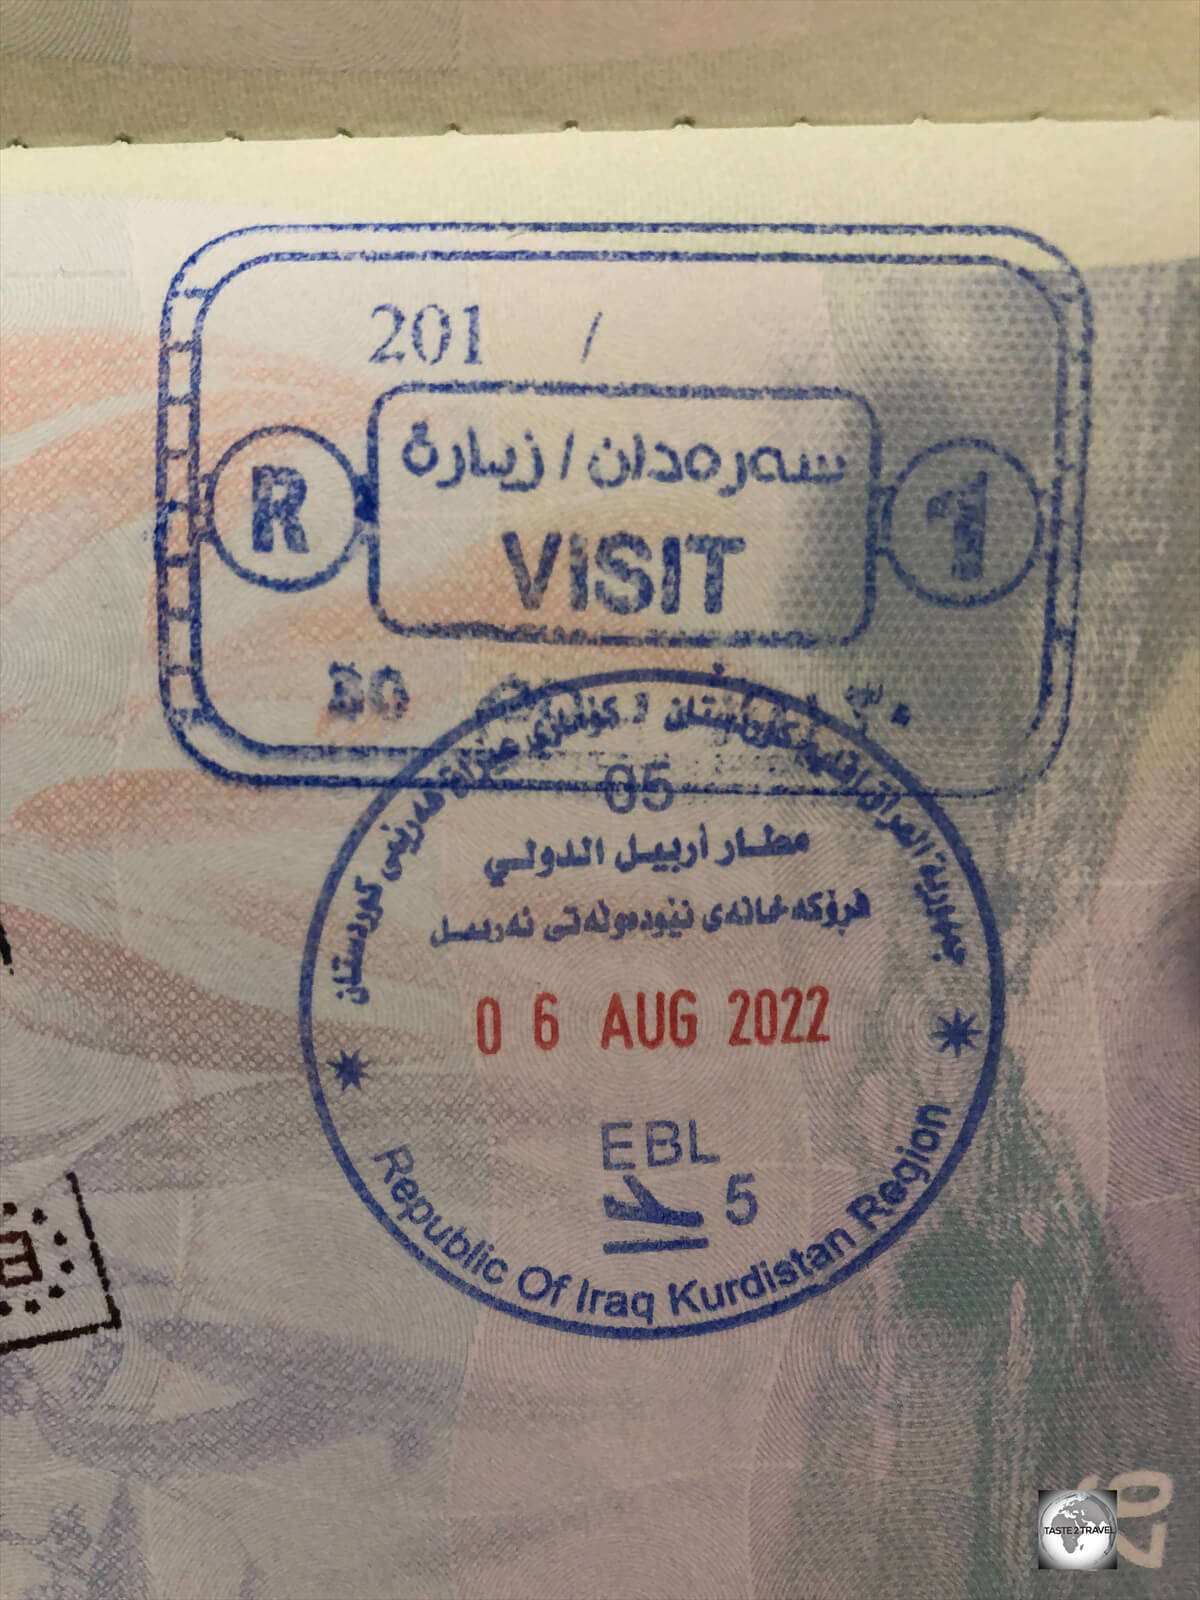 My Iraqi Kurdistan visa-on-arrival. 